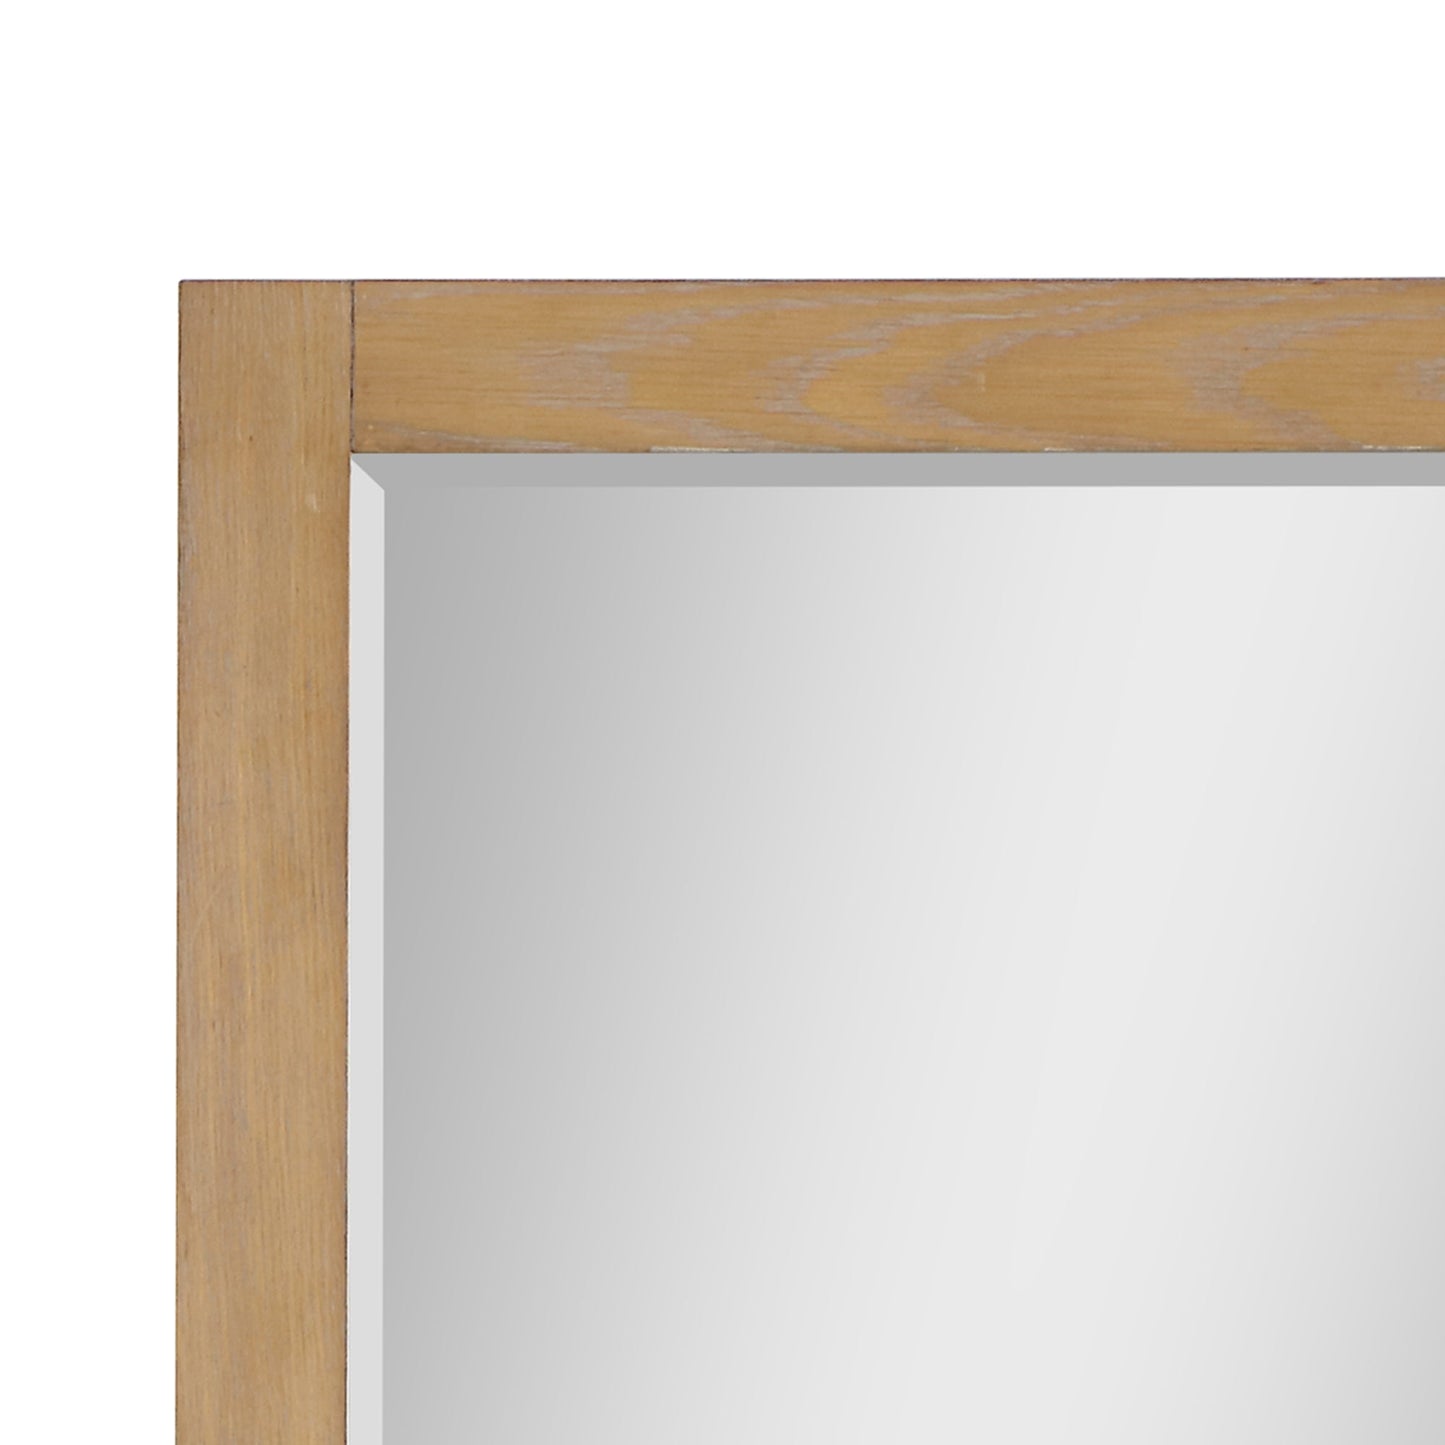 Ivy 28" Rectangular Bathroom Wood Framed Wall Mirror in Washed Oak